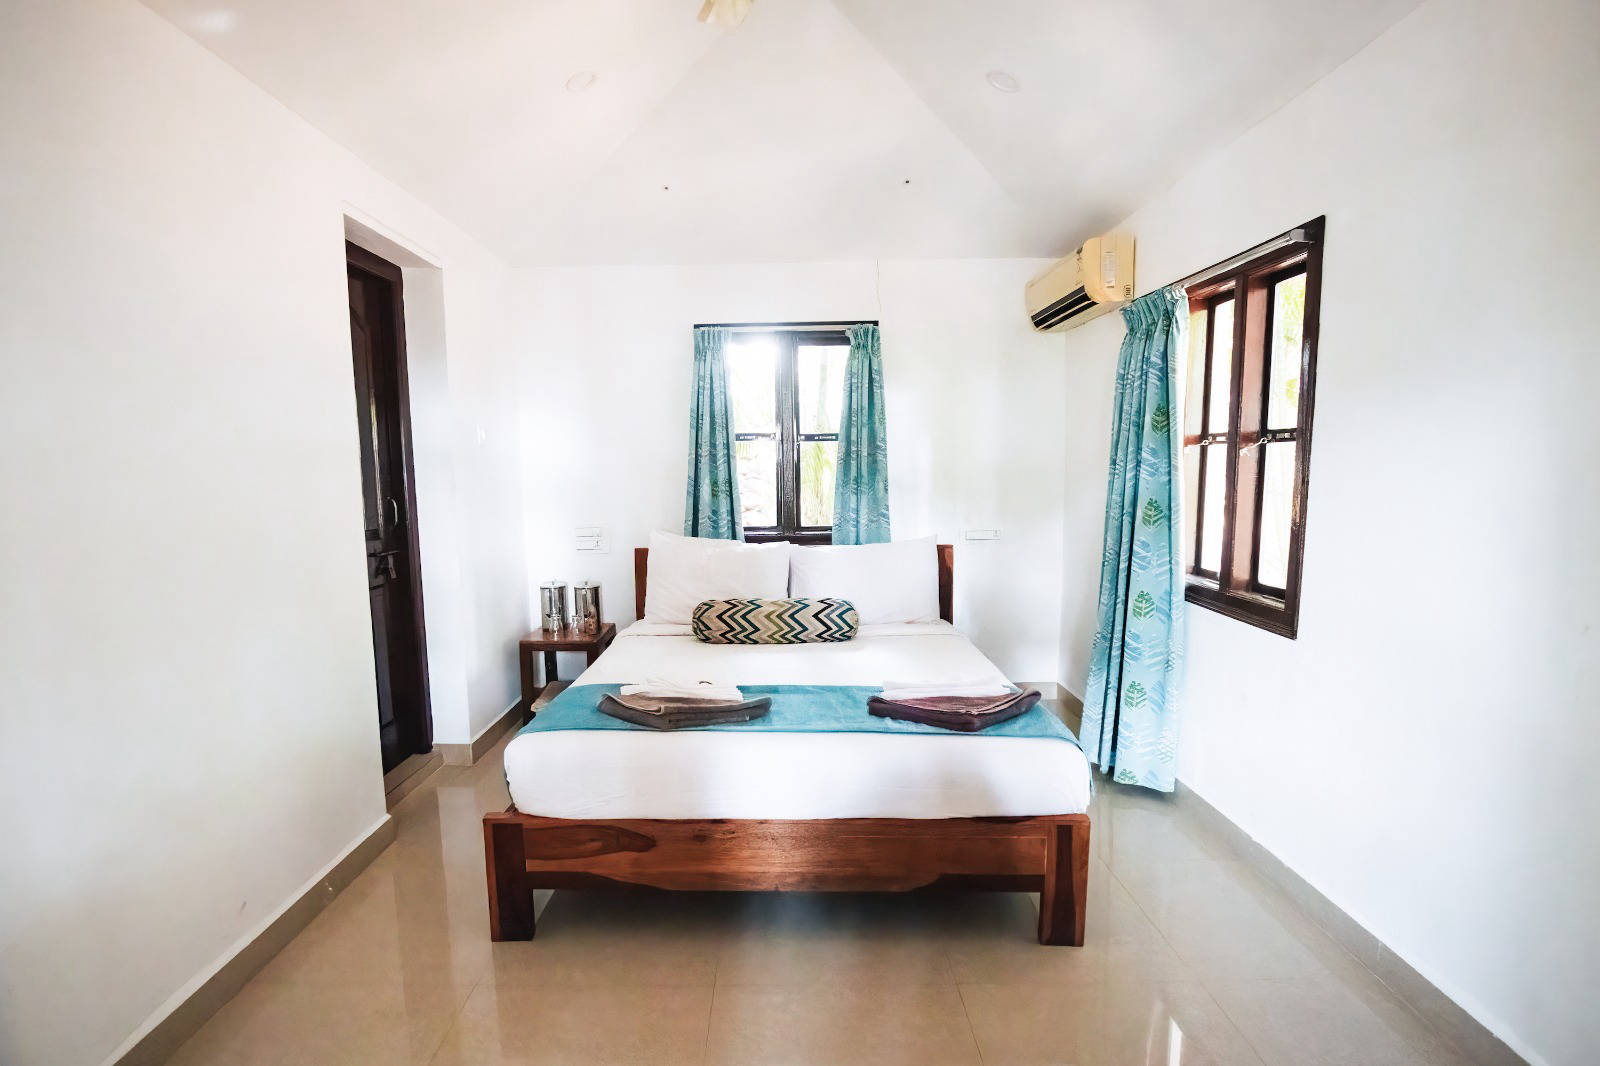 Rooms at Red Earth Gokarna Resort